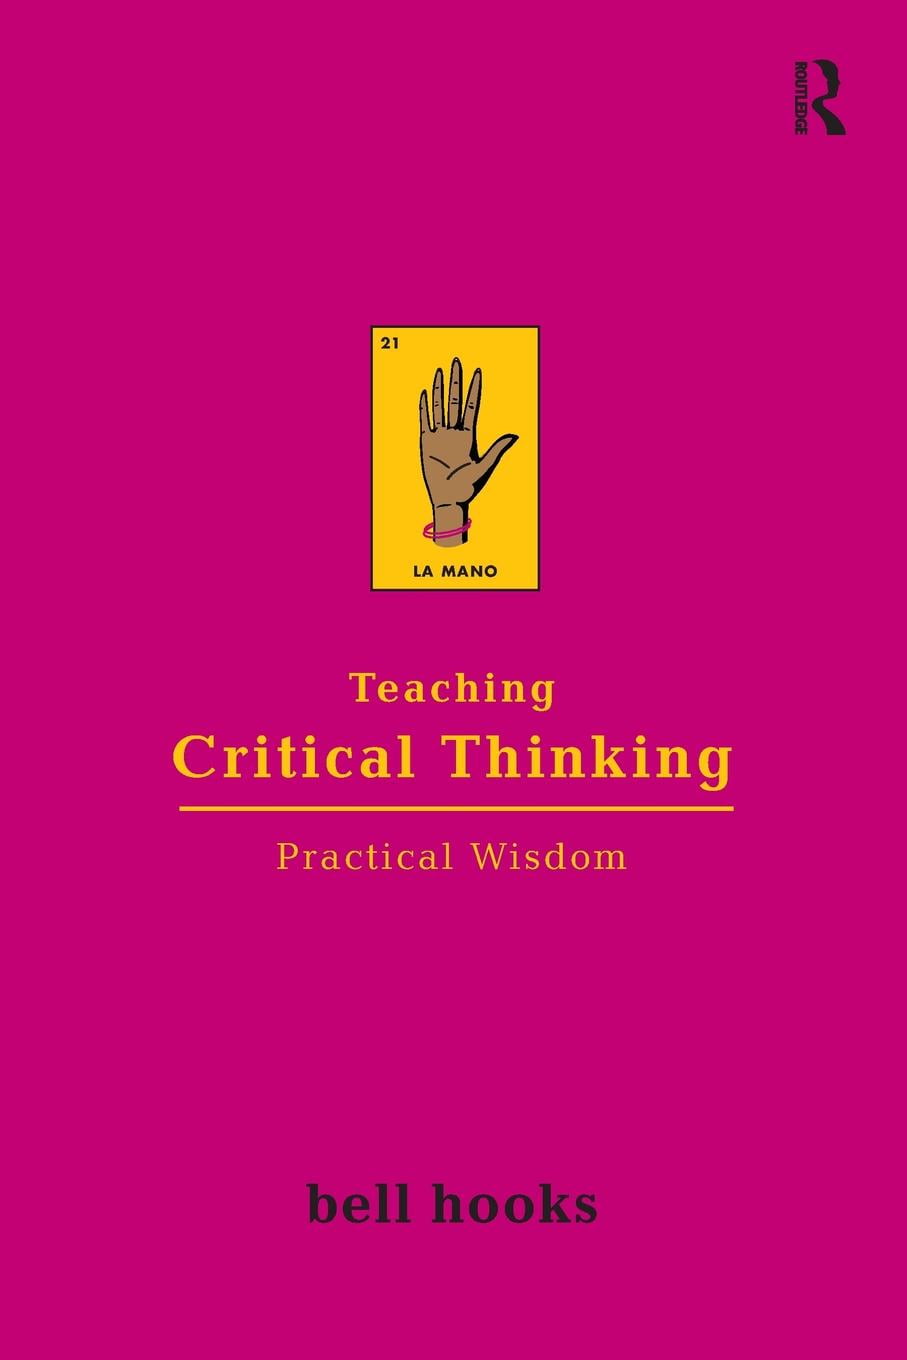 bell hooks teaching critical thinking summary